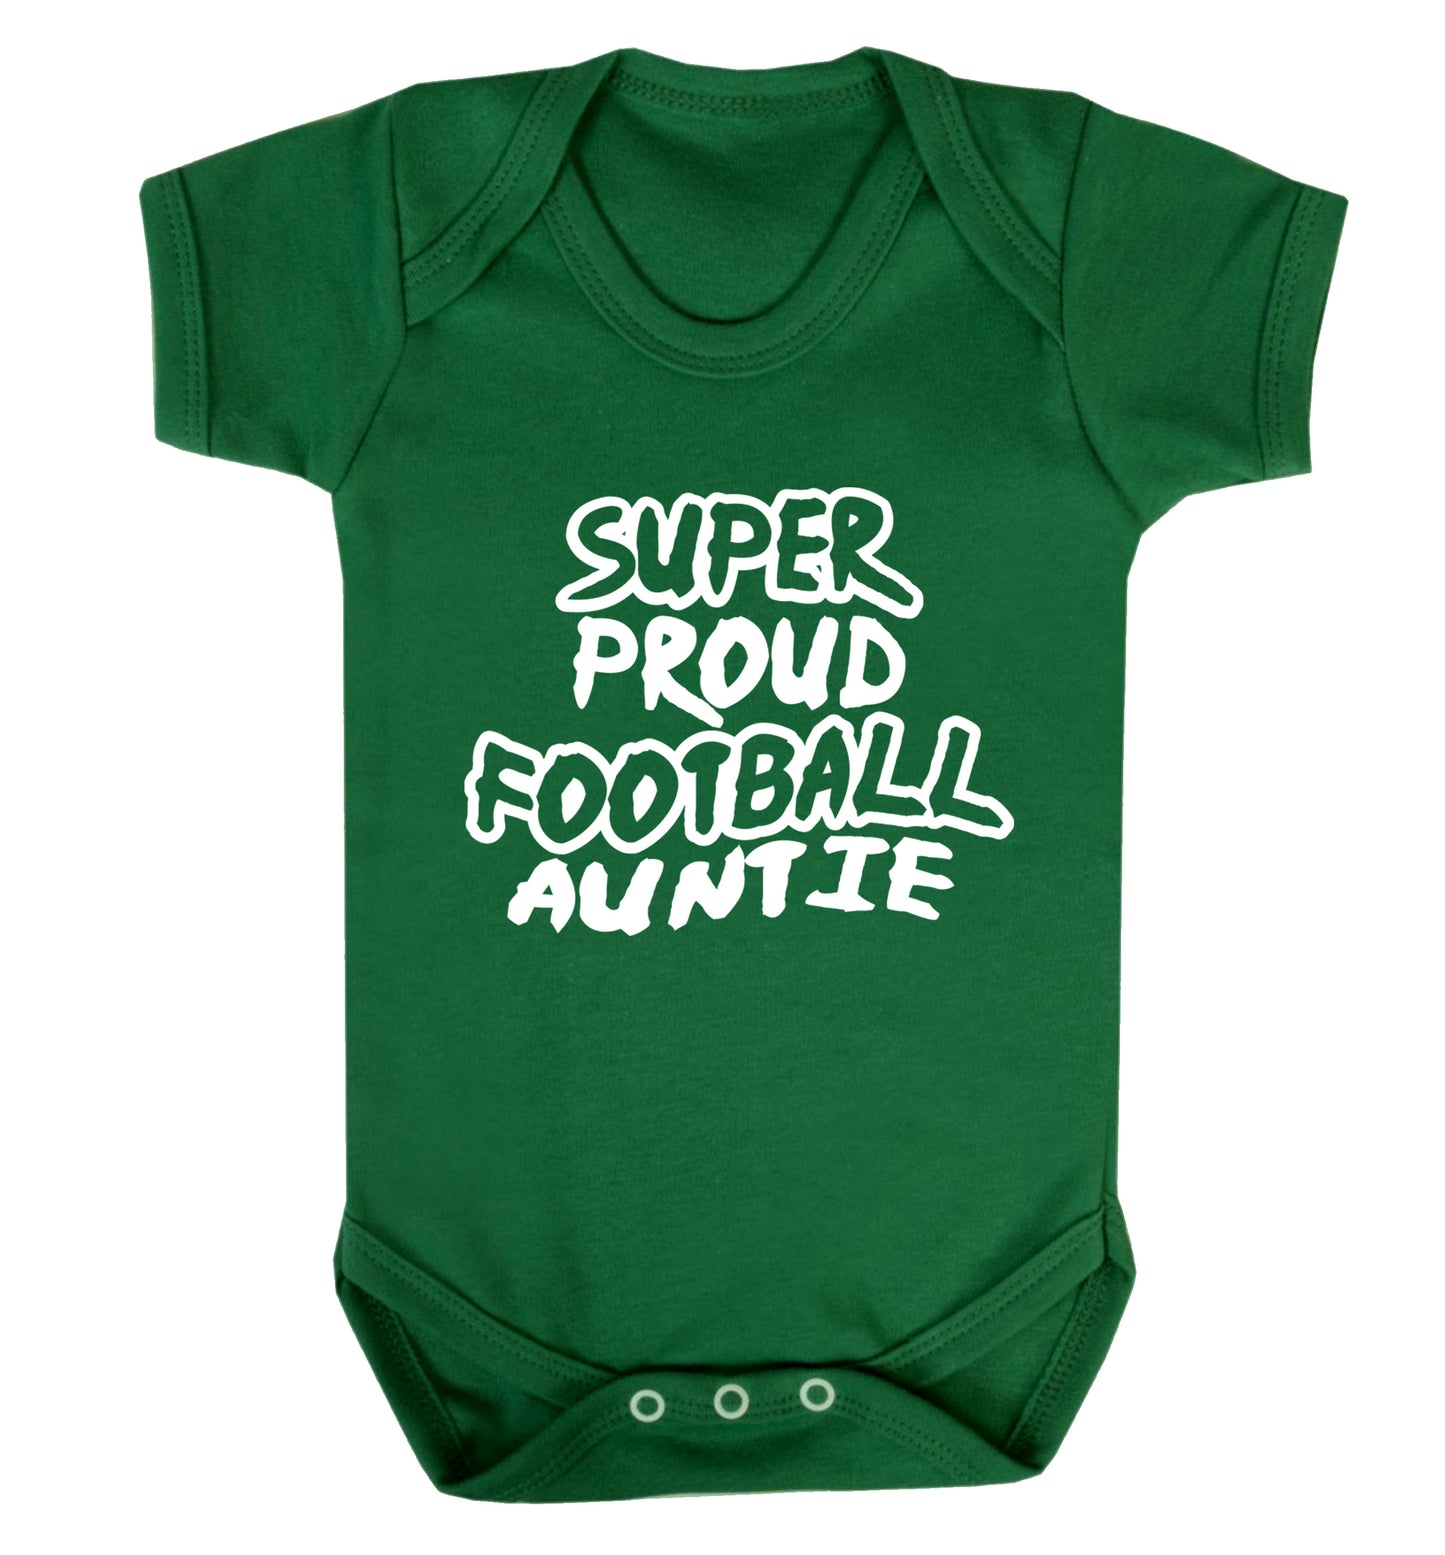 Super proud football auntie Baby Vest green 18-24 months